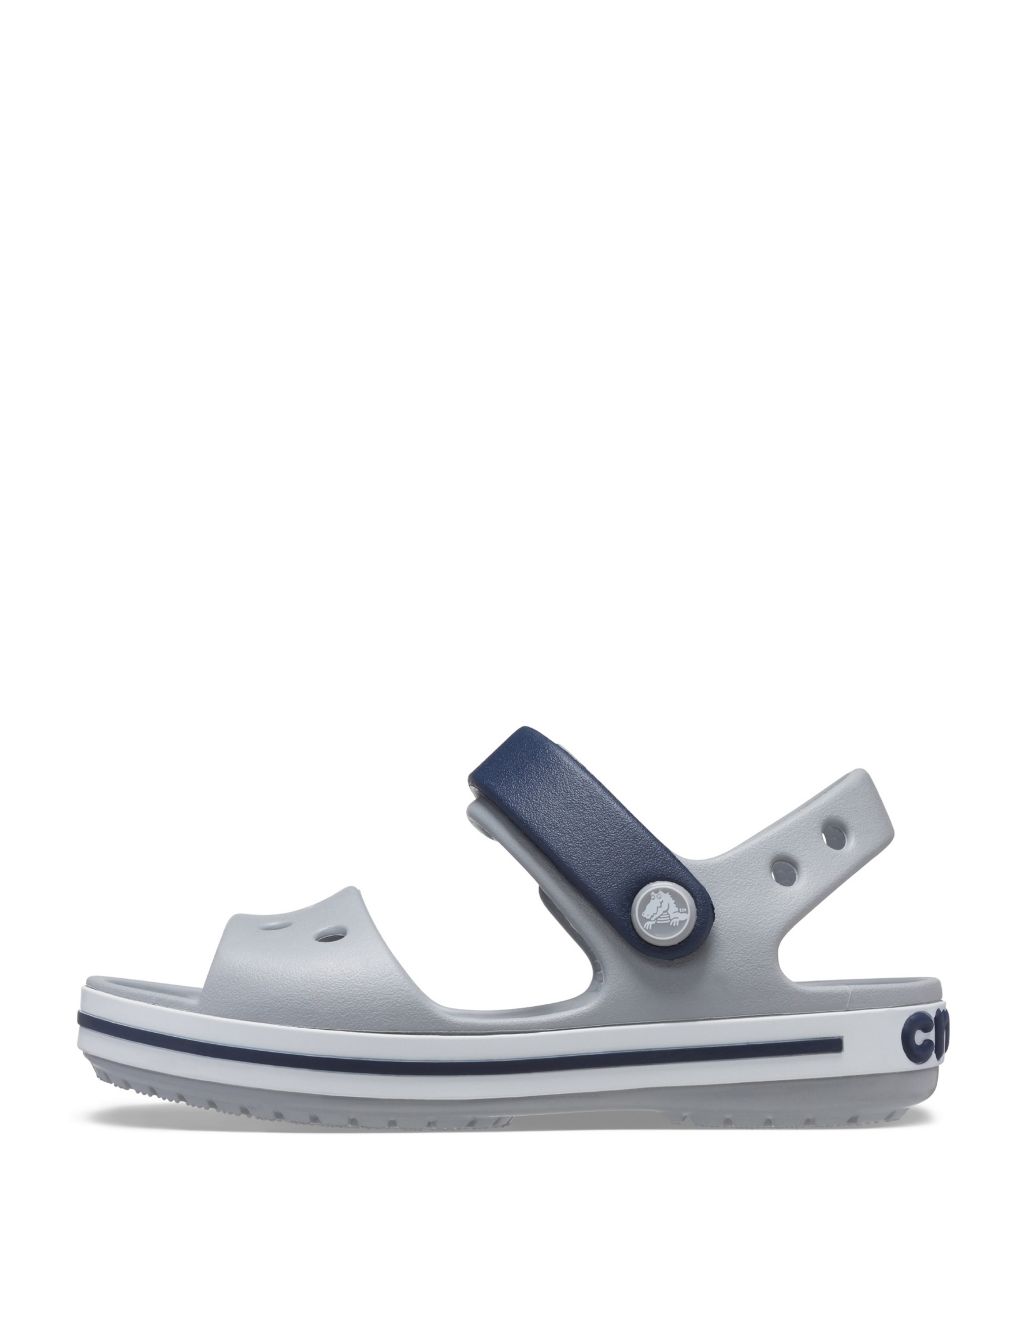 Kids' Crocband™ Riptape Sandals (4 Small - 3 Large) image 3